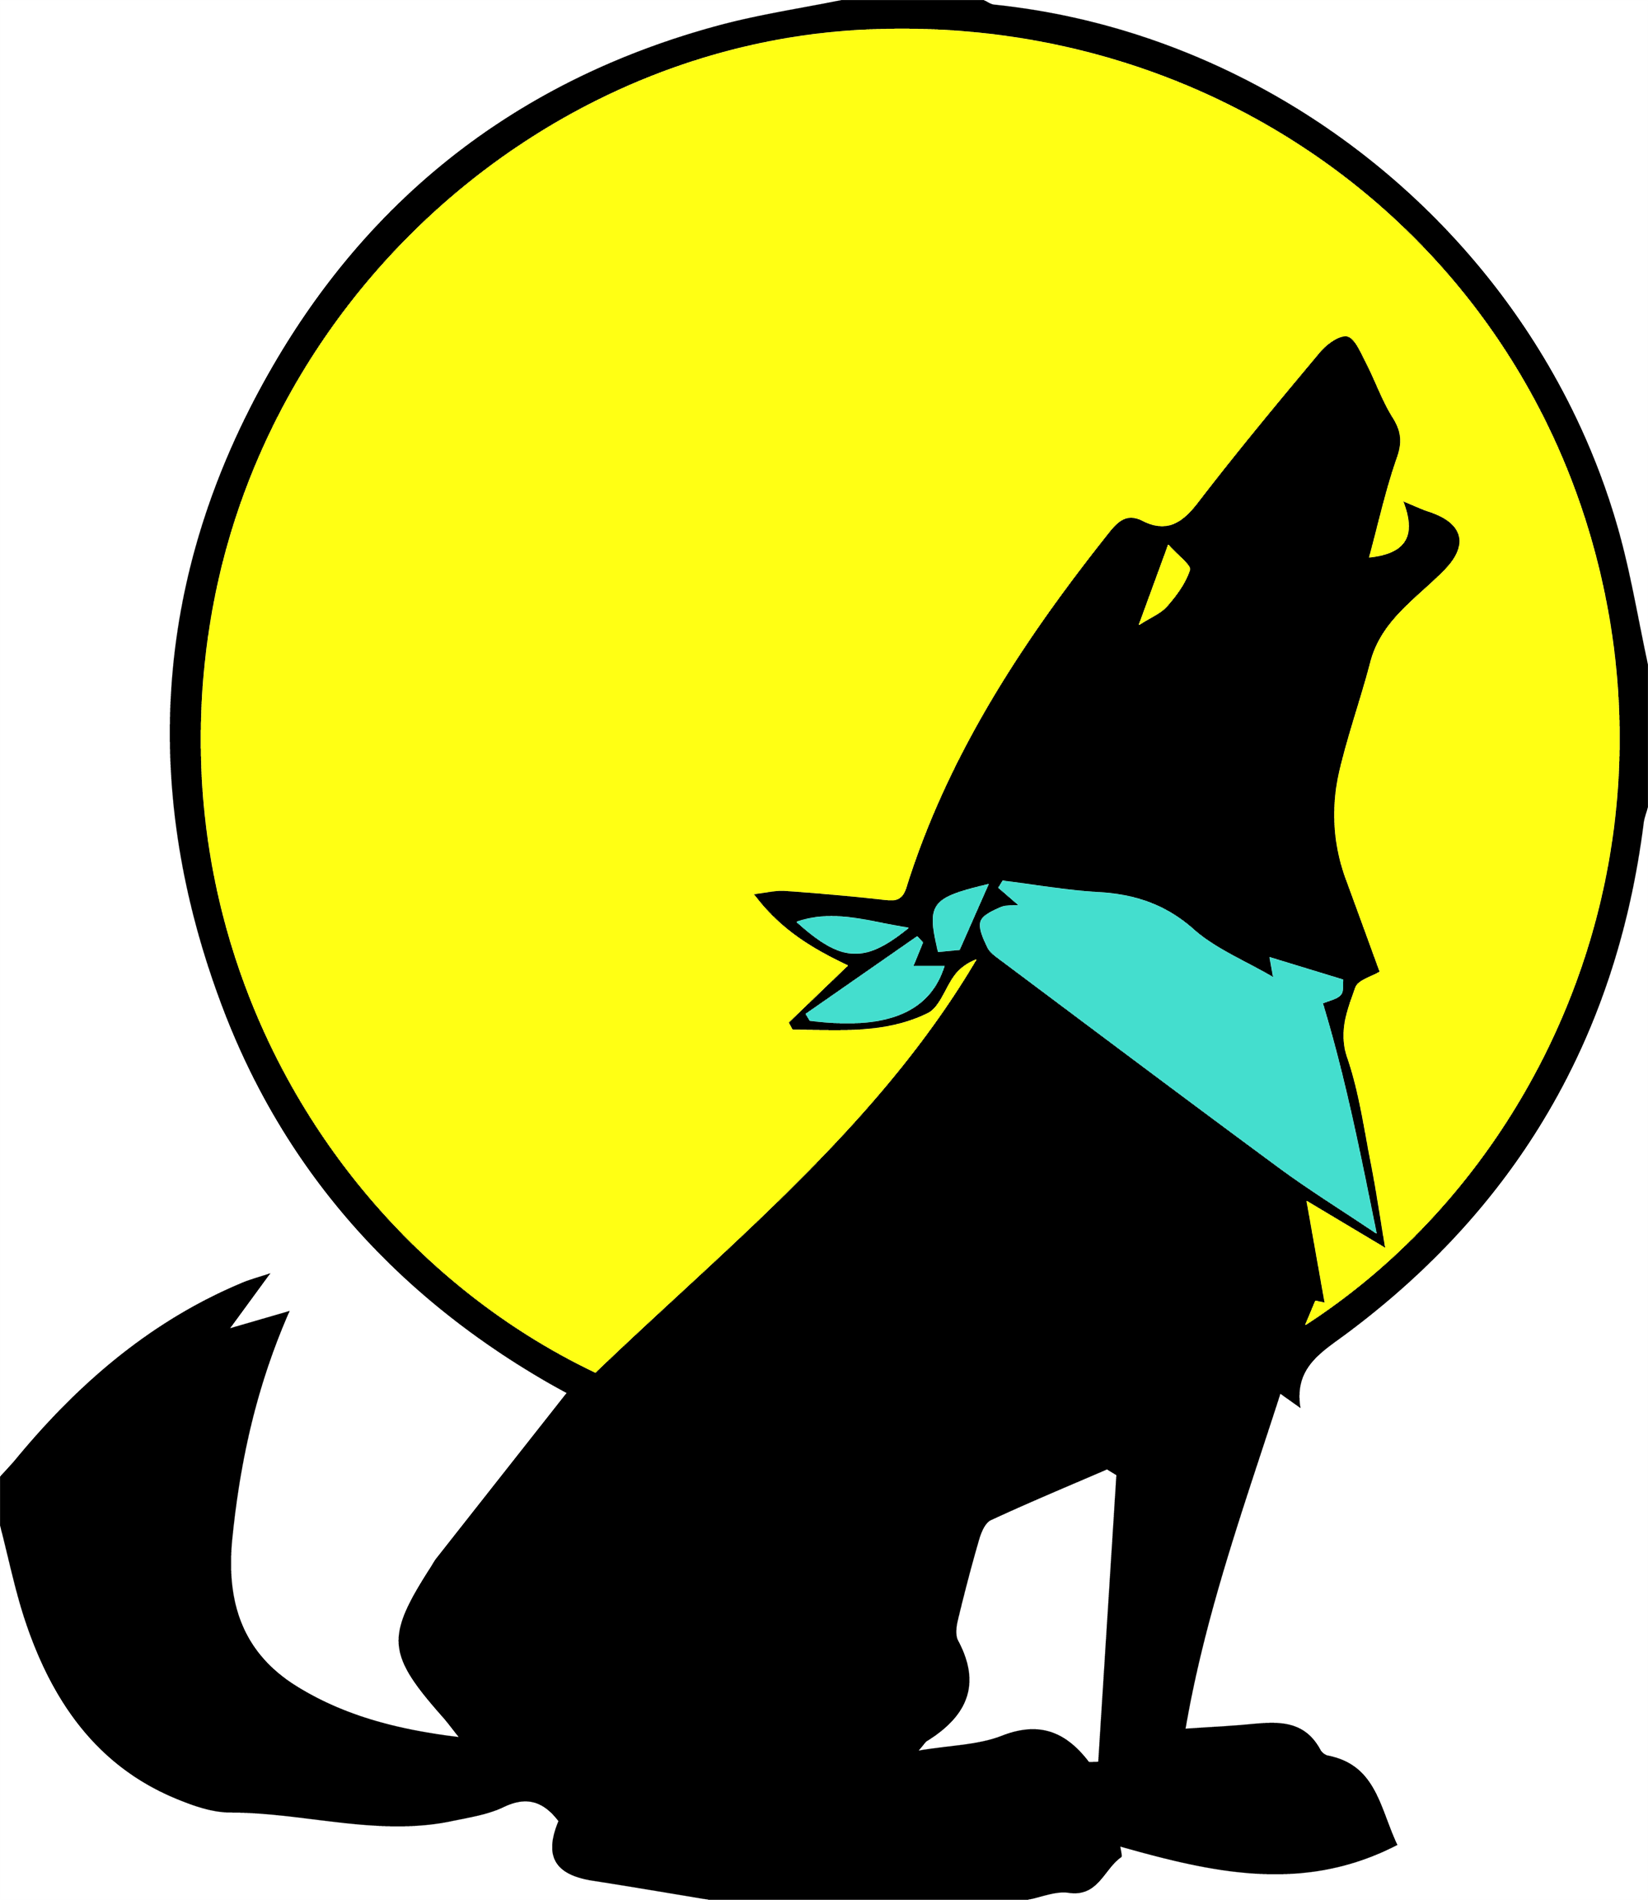 Havasupai Elementary logo - Coyote mascot